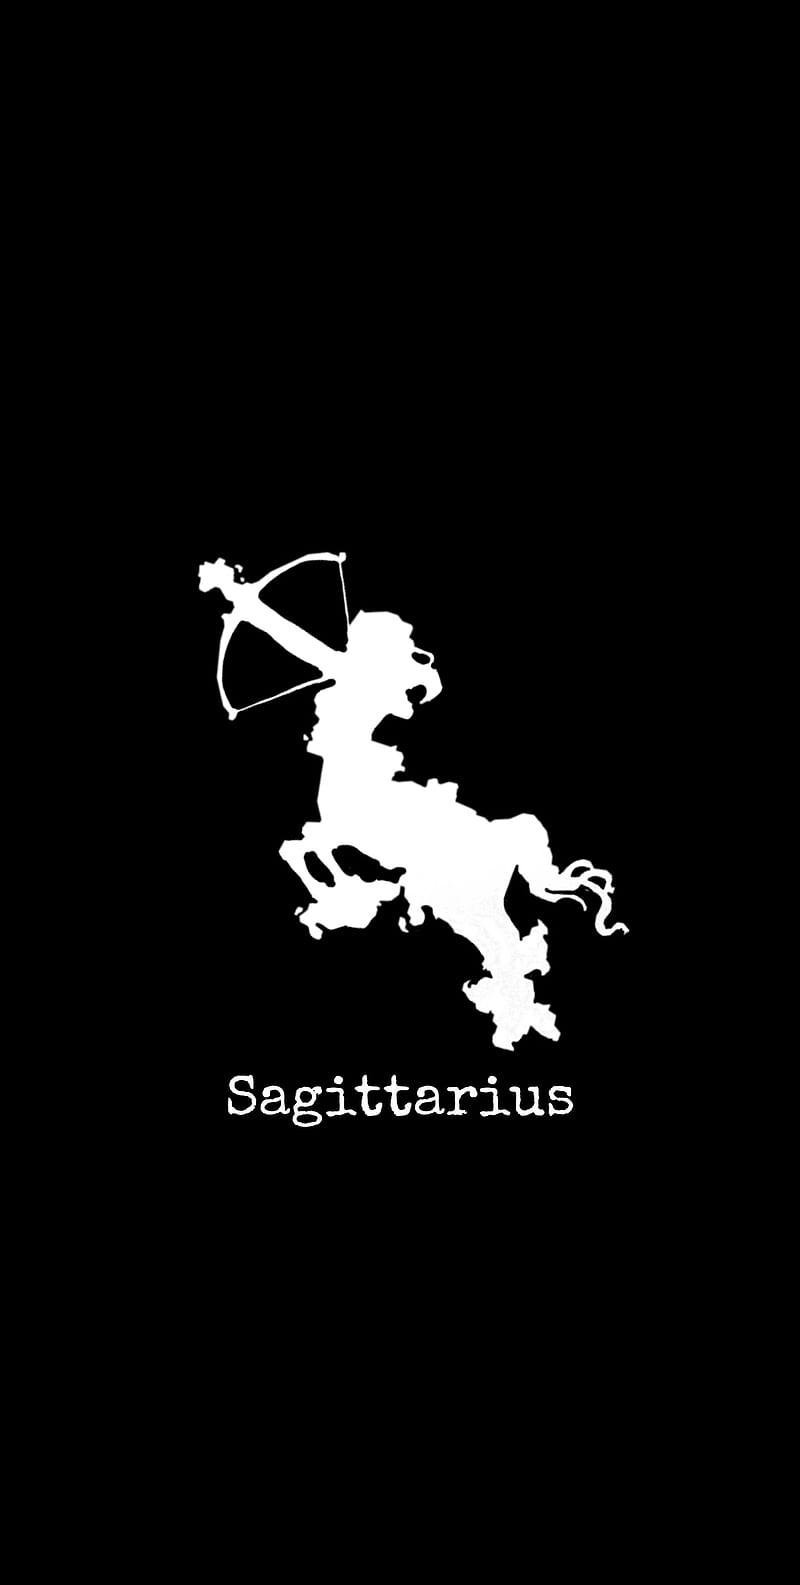 Sagittarius Wallpaper by ohlookaSPACE on DeviantArt